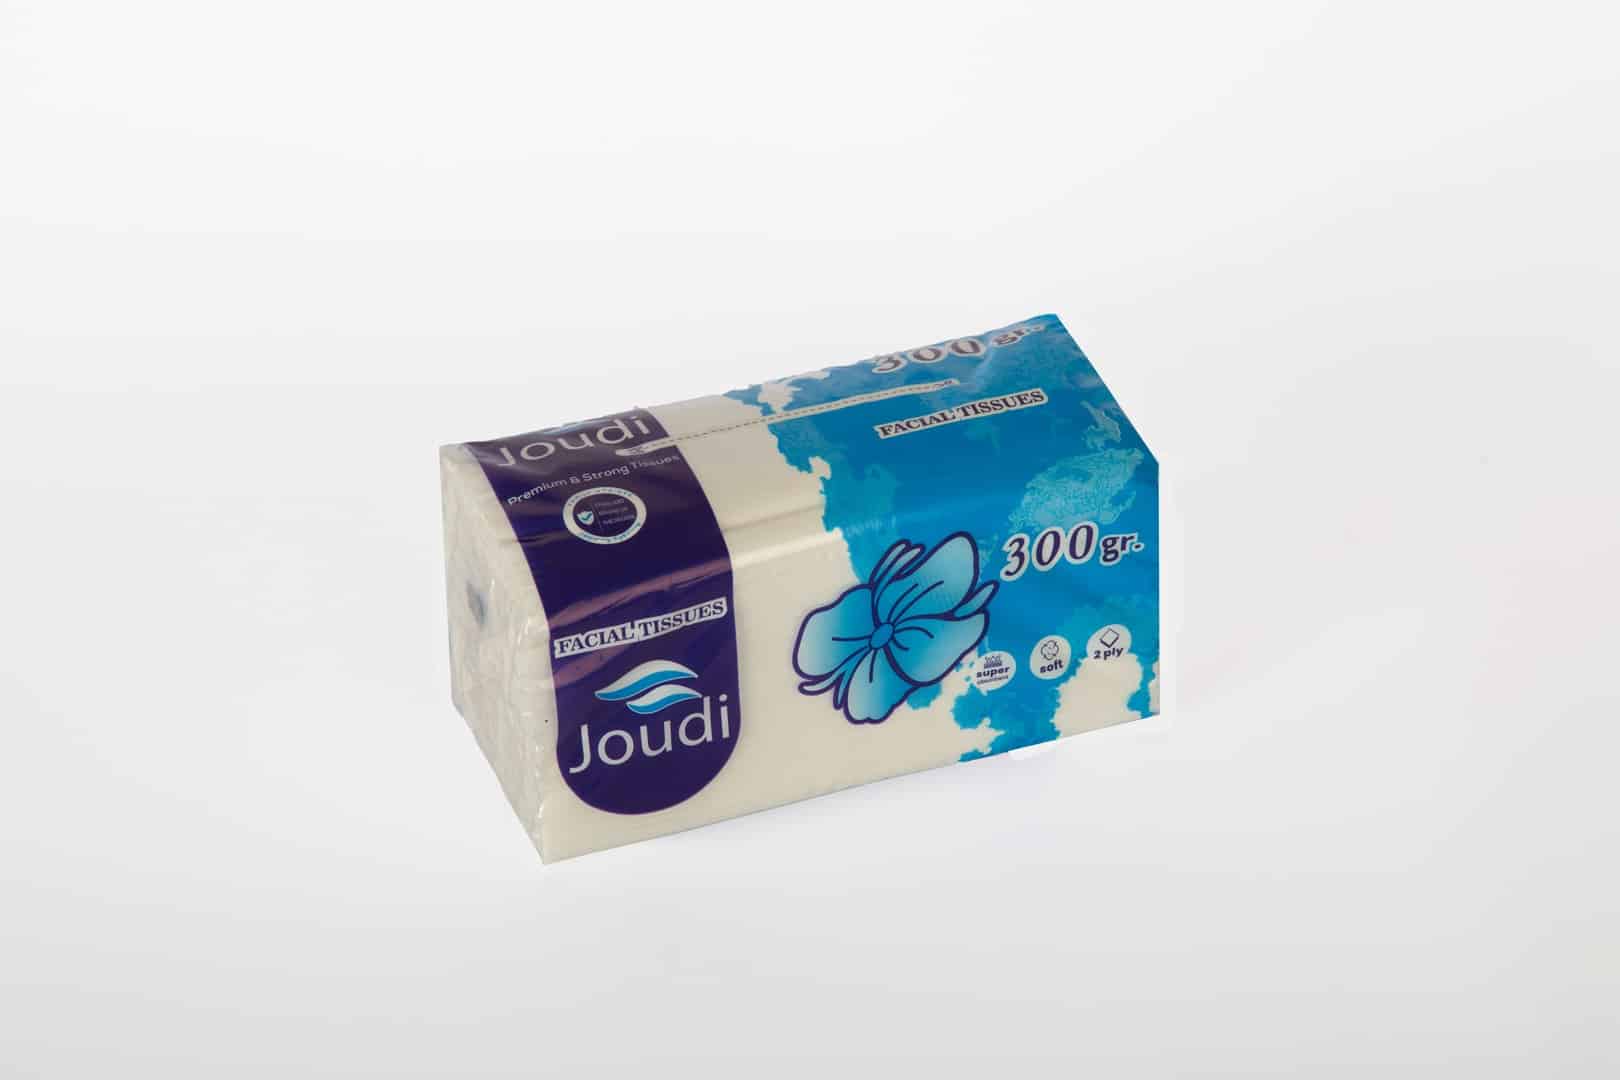 intaj tissues - private label